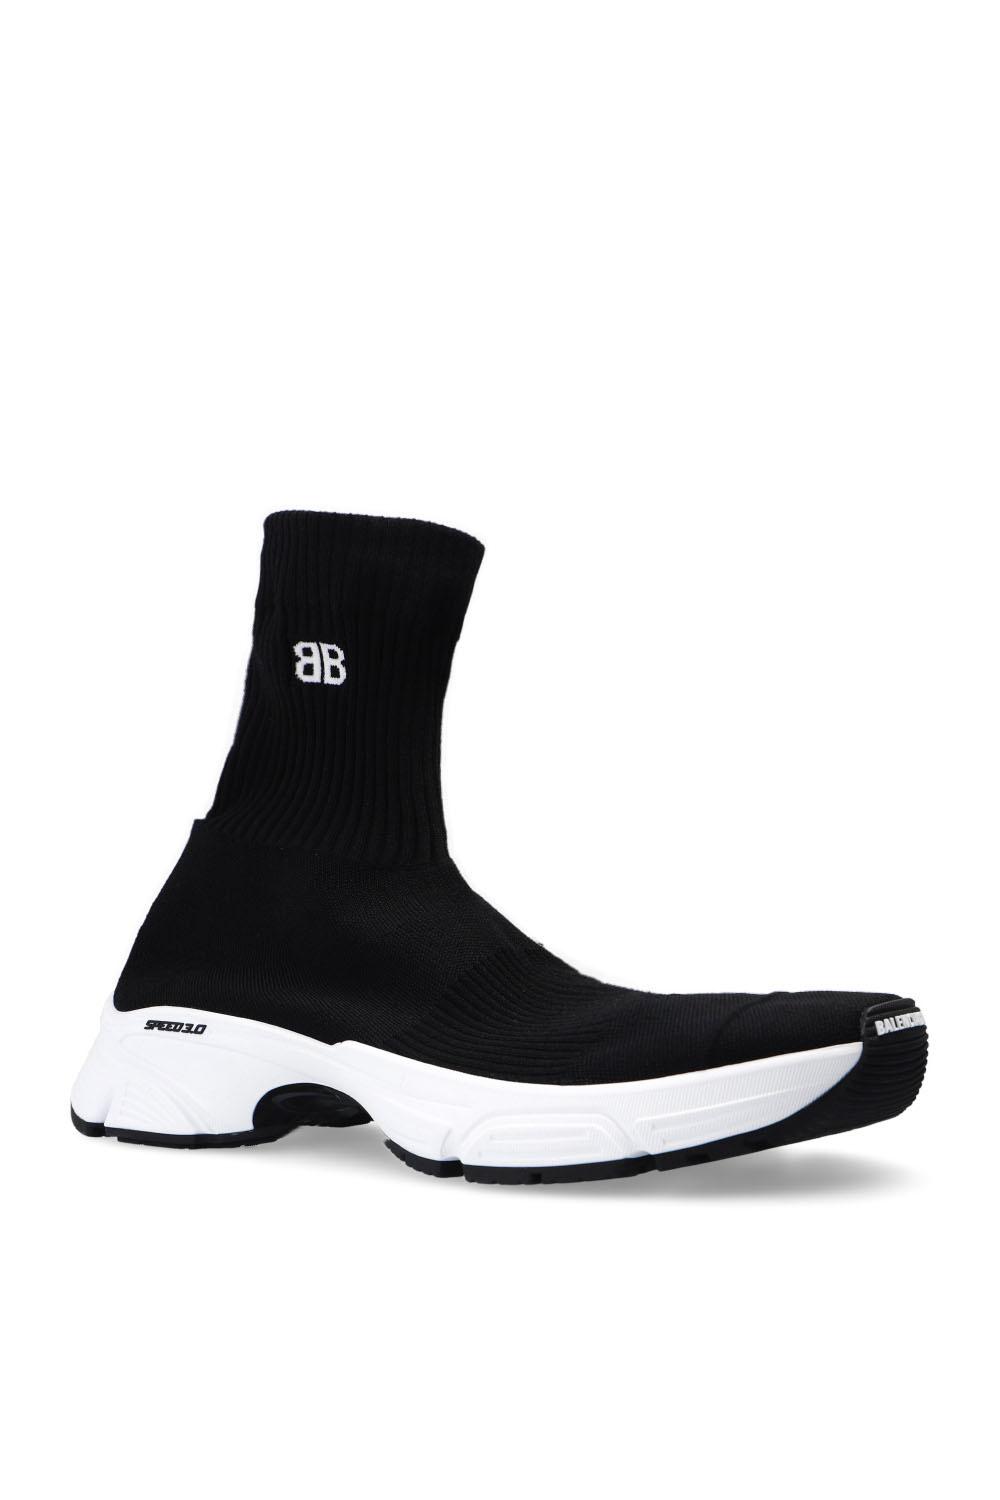 Balenciaga 'speed 3.0' Sock Sneakers in Black for Men - Lyst